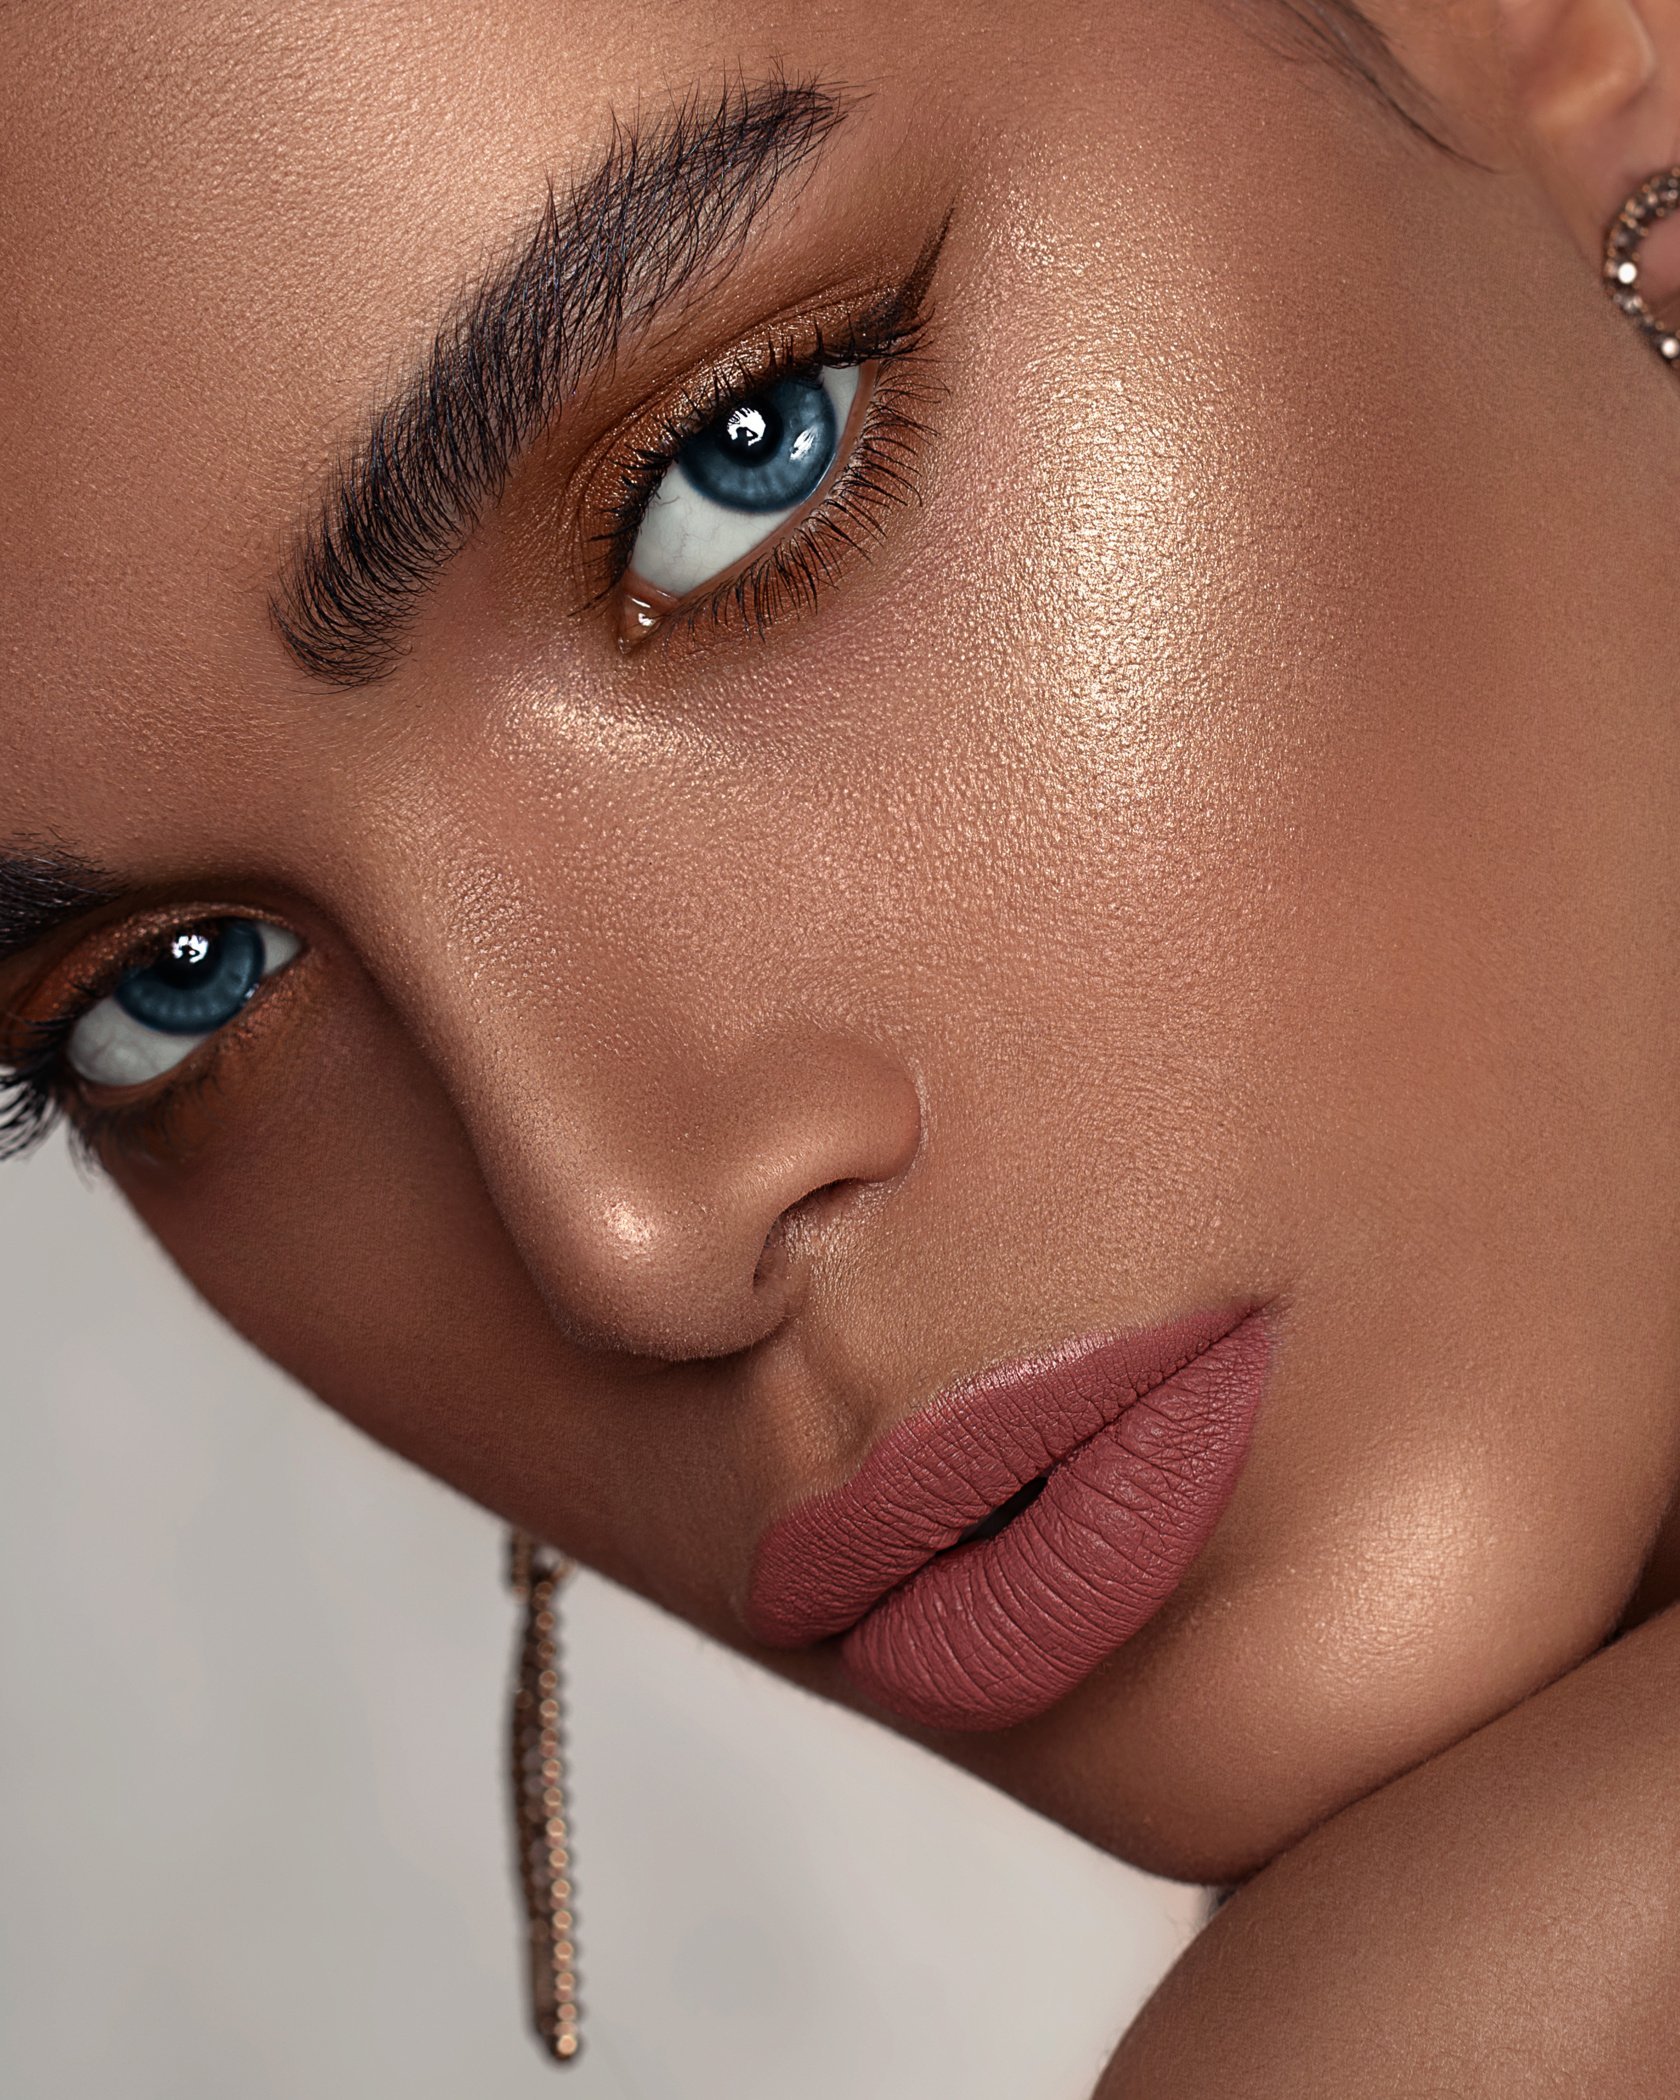 How We Shot It  Glow: Makeup & Lighting – Master Beauty Photography